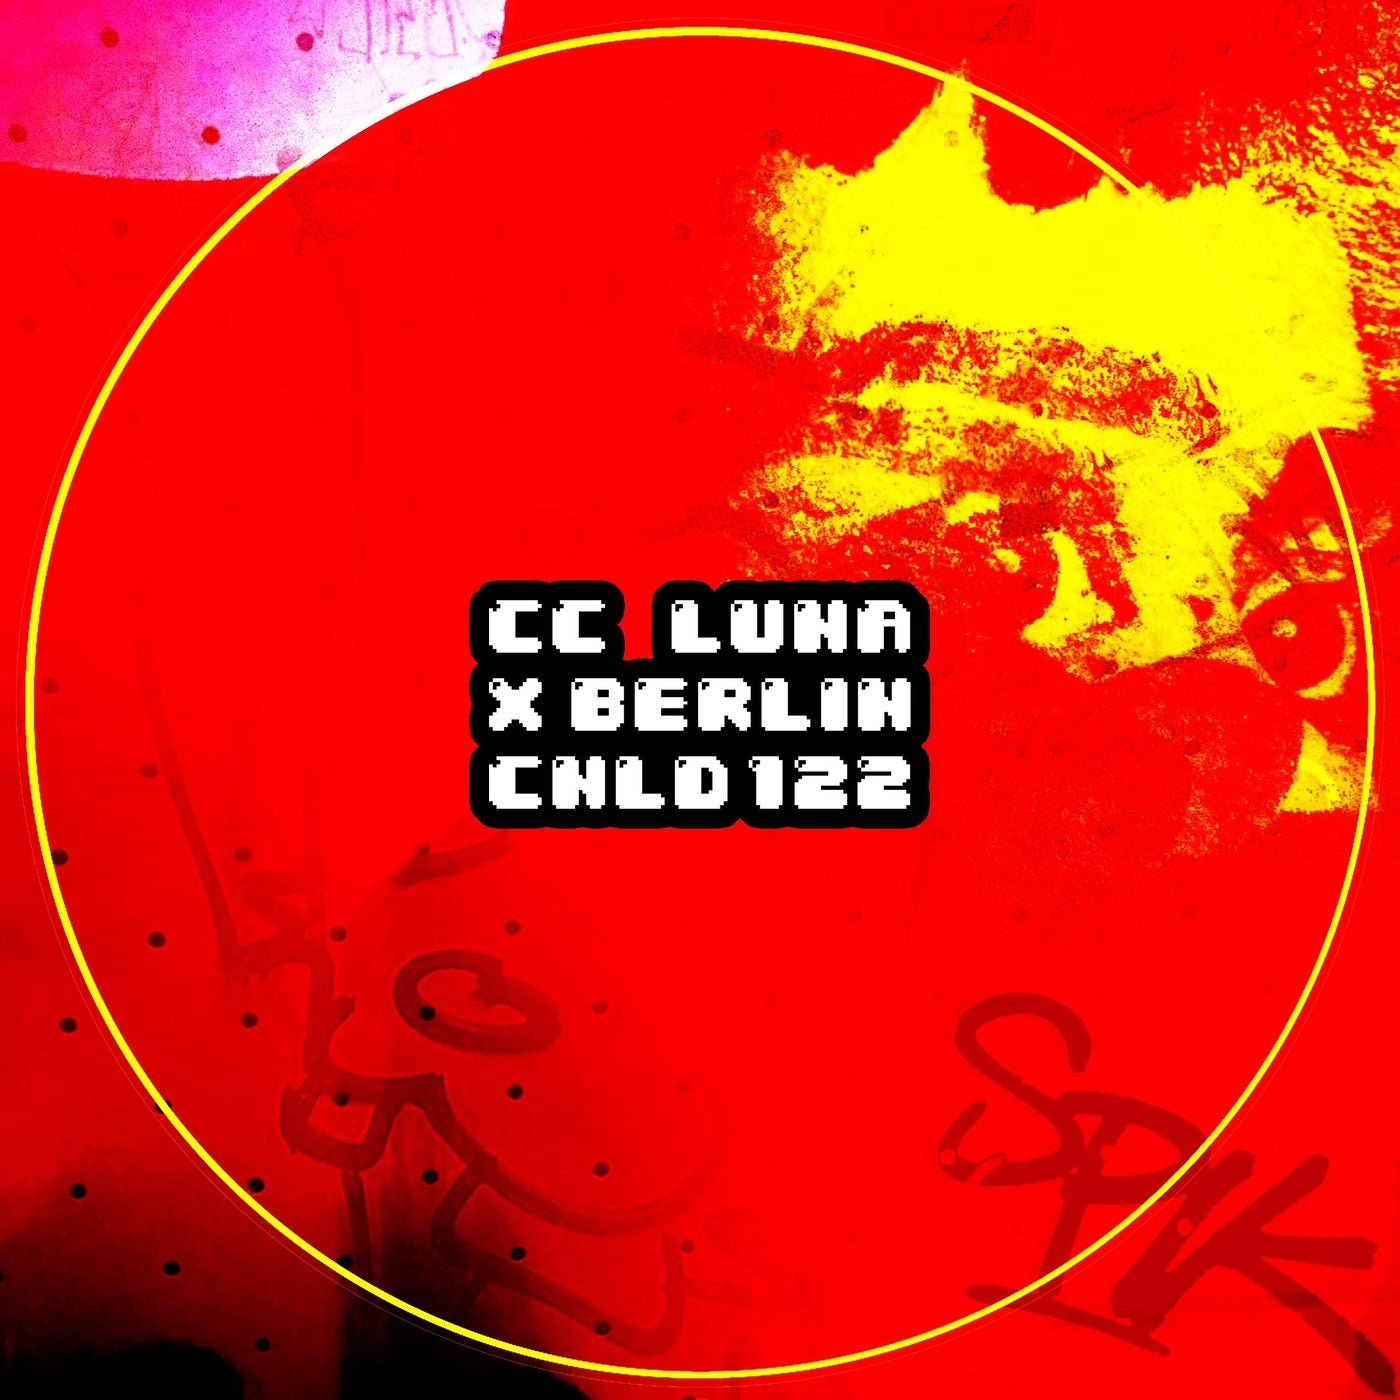 CC Luna - X Berlin [CANCELLED]